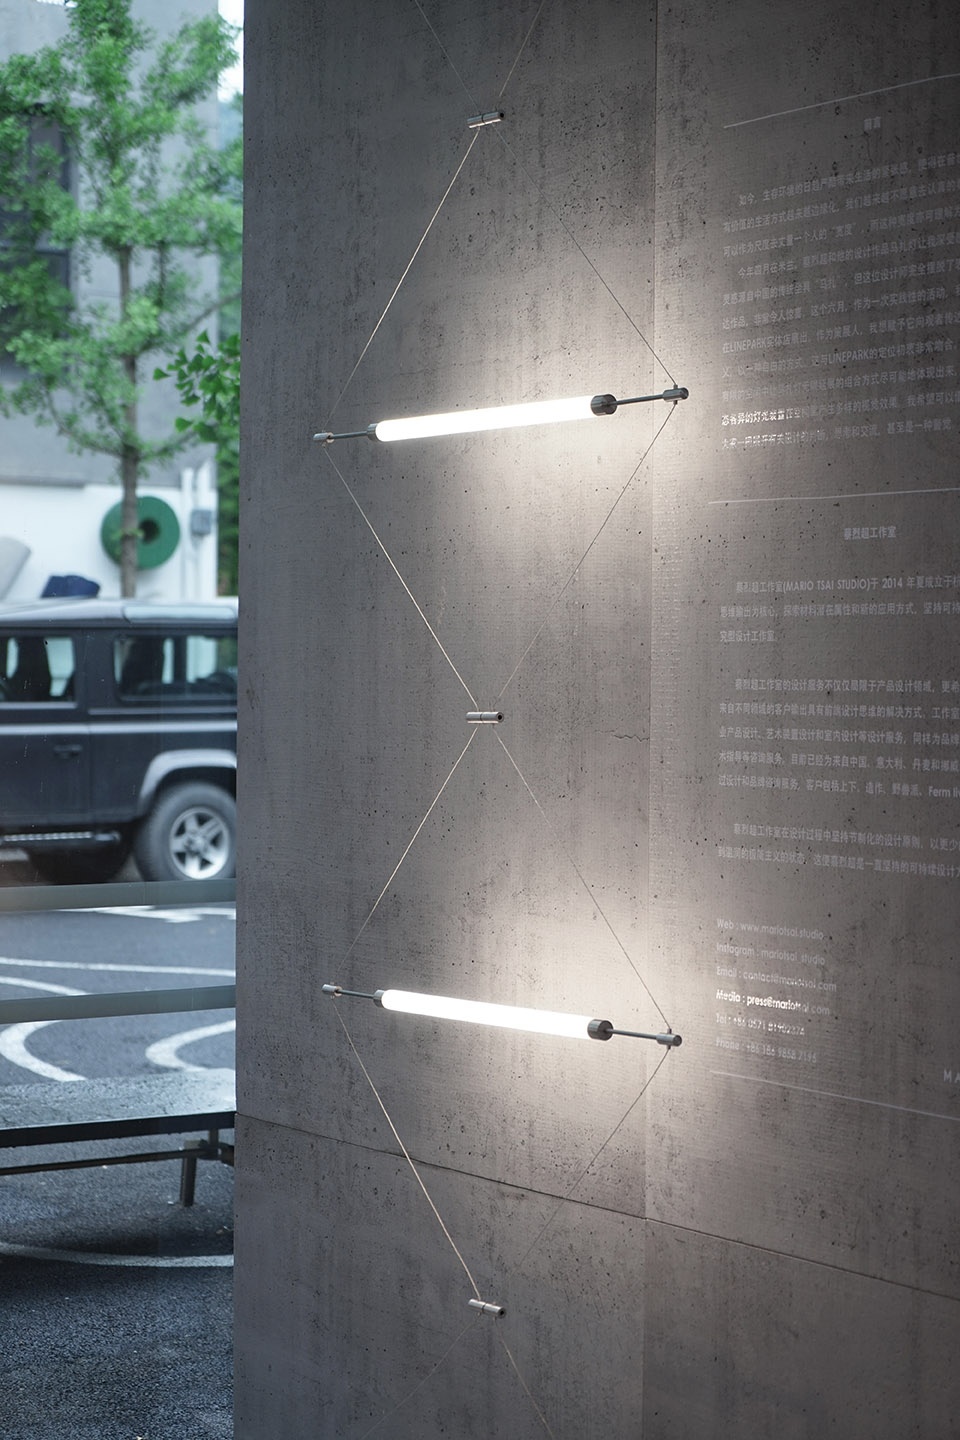 016-mazha-lighting-system-hangzhou-solo-exhibition-by-mario-tsai-studio.jpg